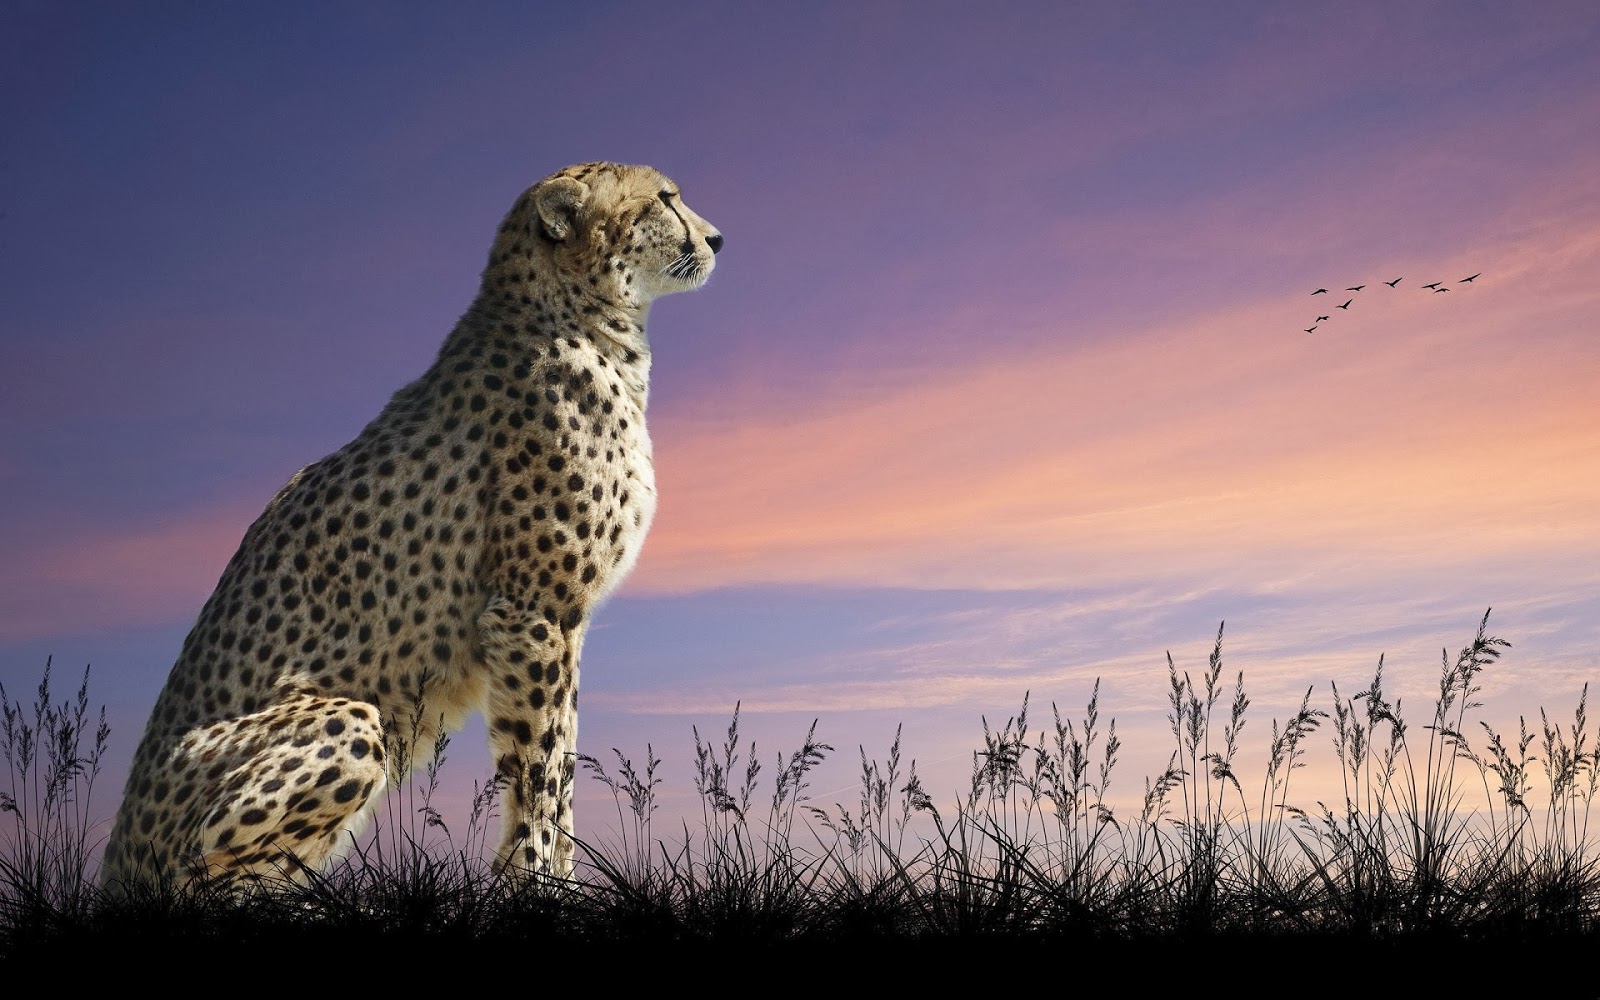  wallpaper of a sitting cheetah HD cheetah desktop wallpaper